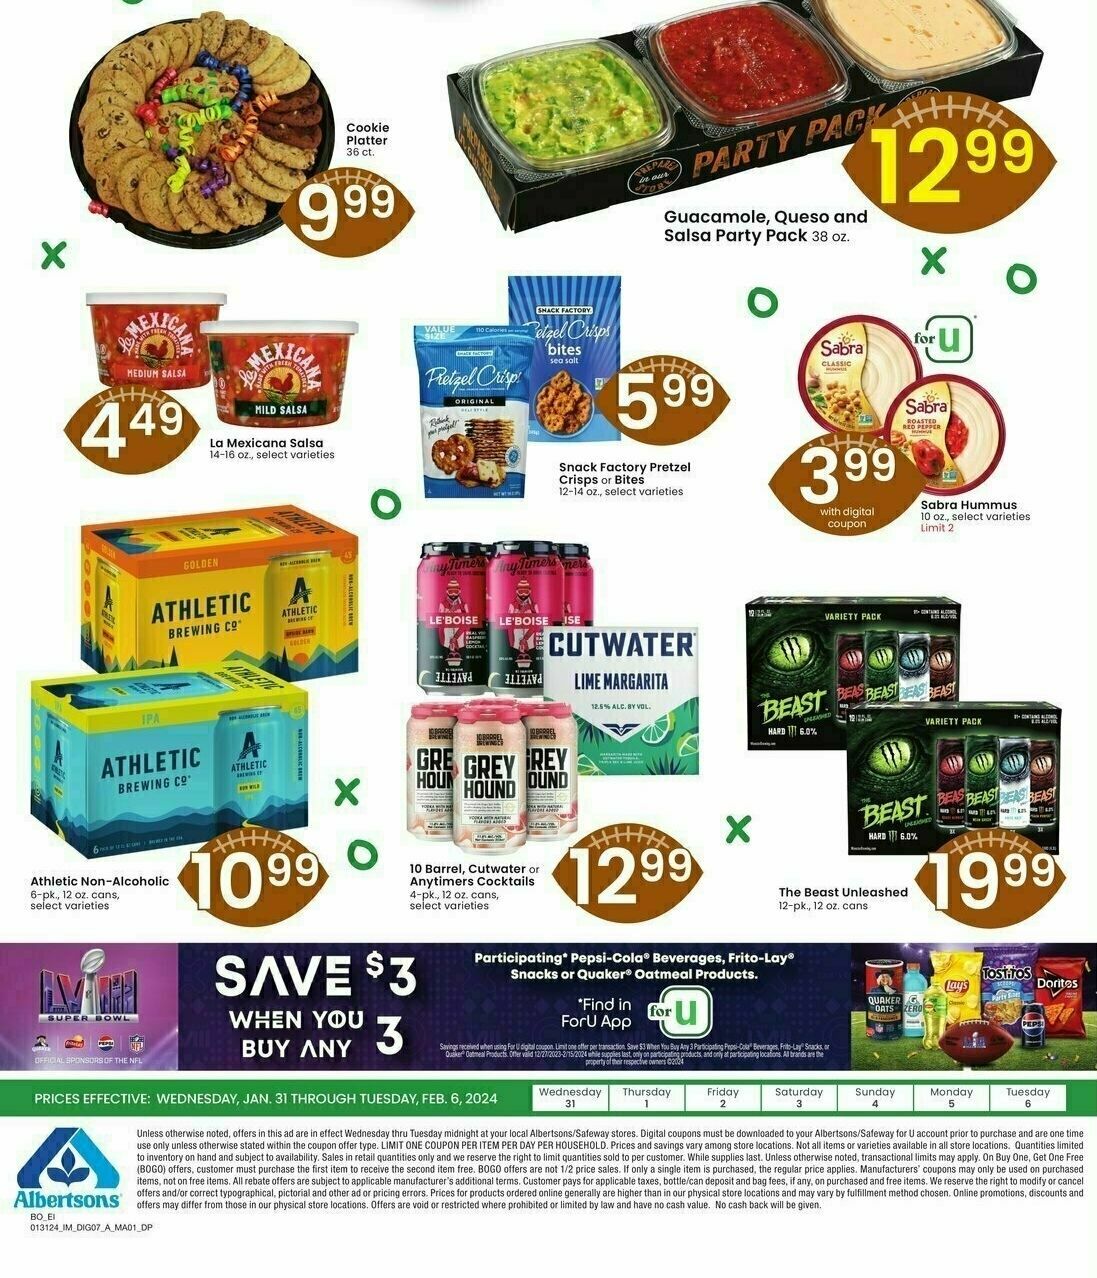 Albertsons Bonus Savings Weekly Ad from January 31